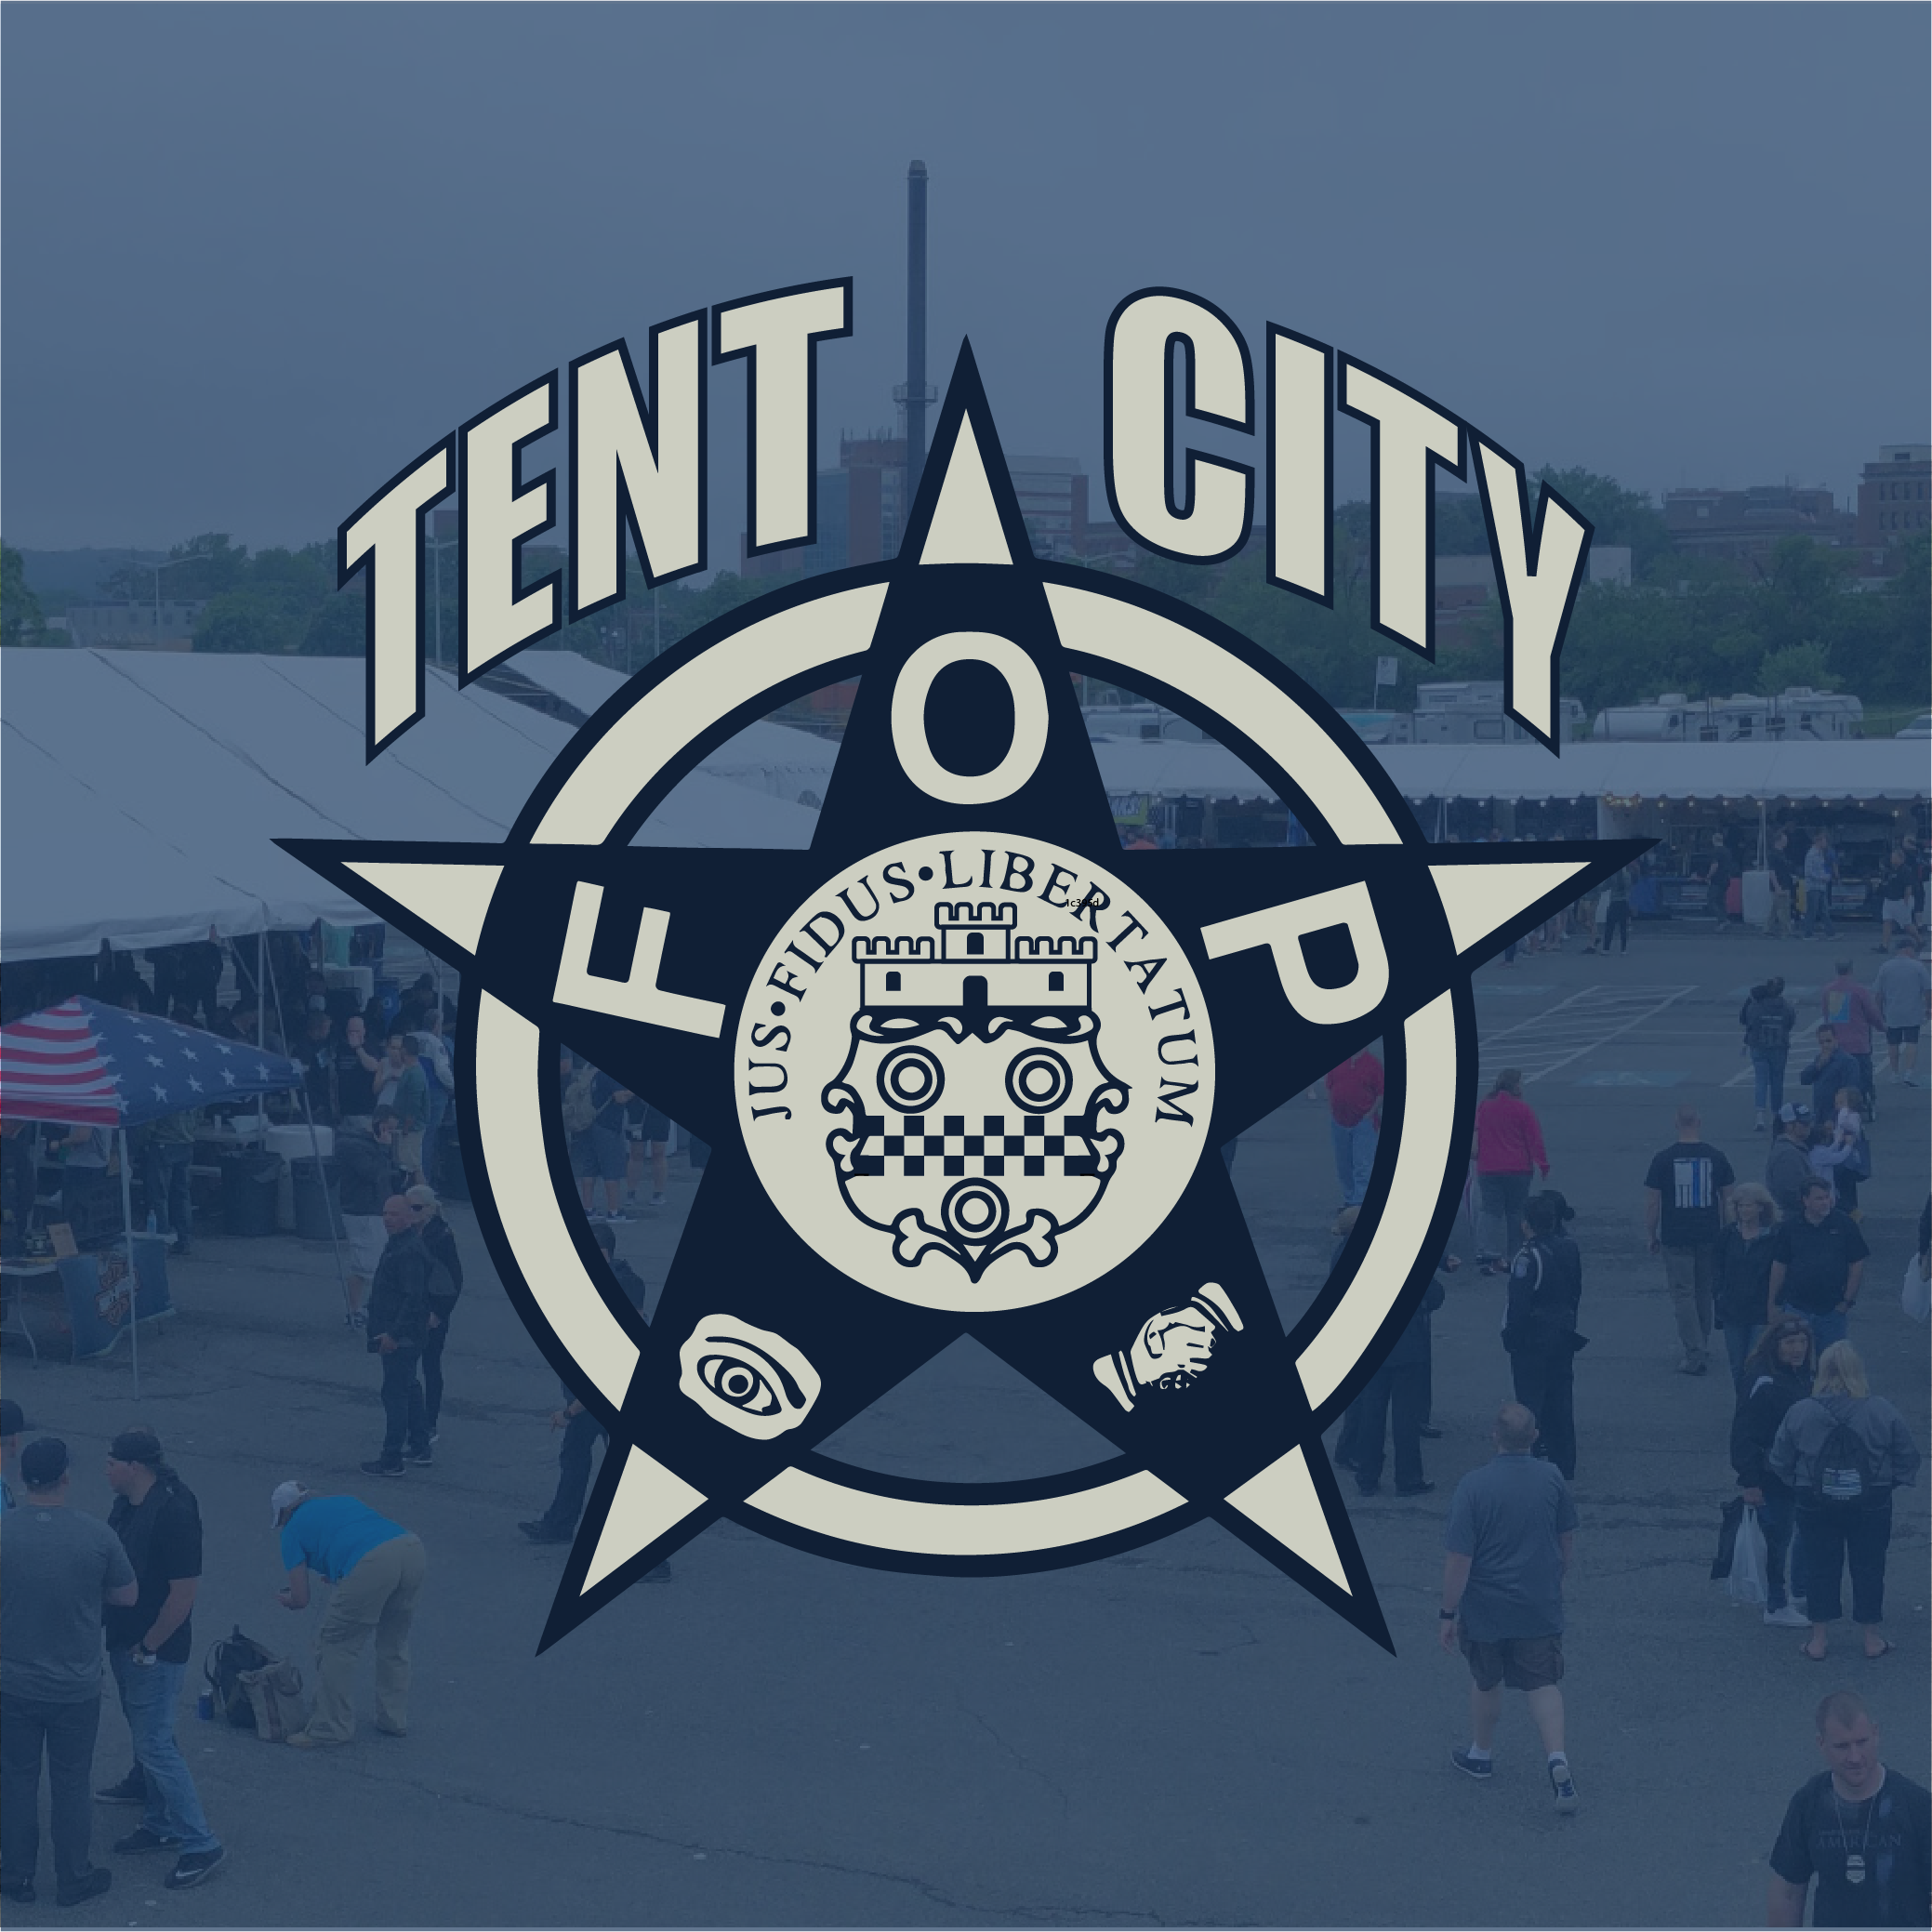 Vendor Trailer Parking Police Week Tent City